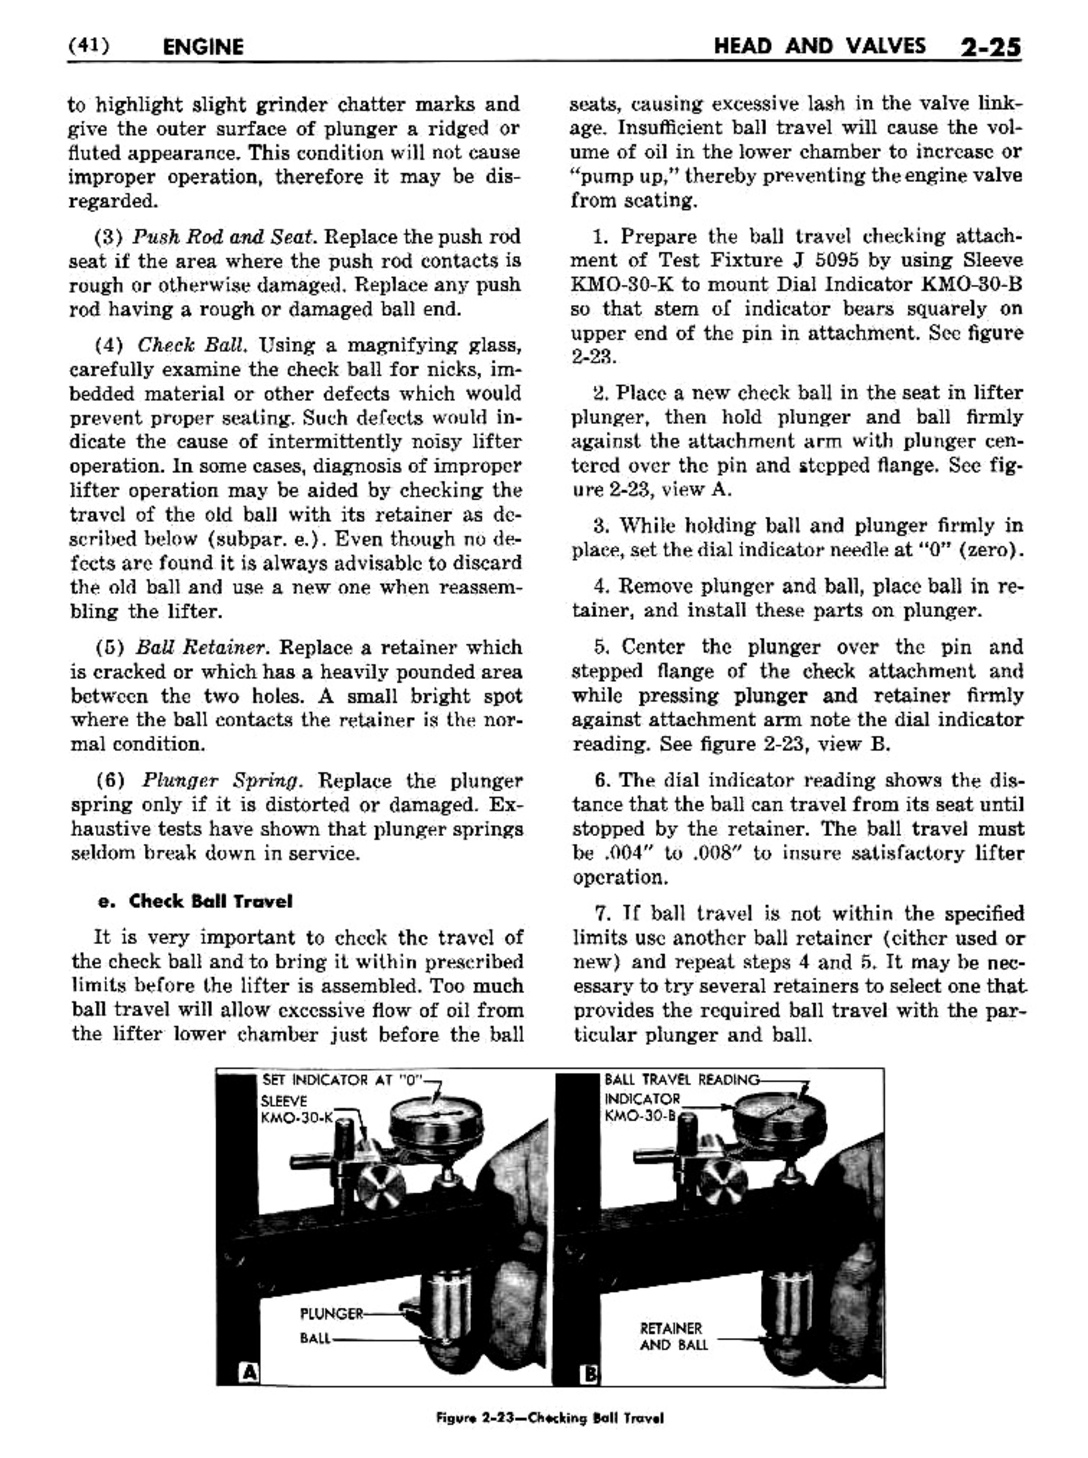 n_03 1954 Buick Shop Manual - Engine-025-025.jpg